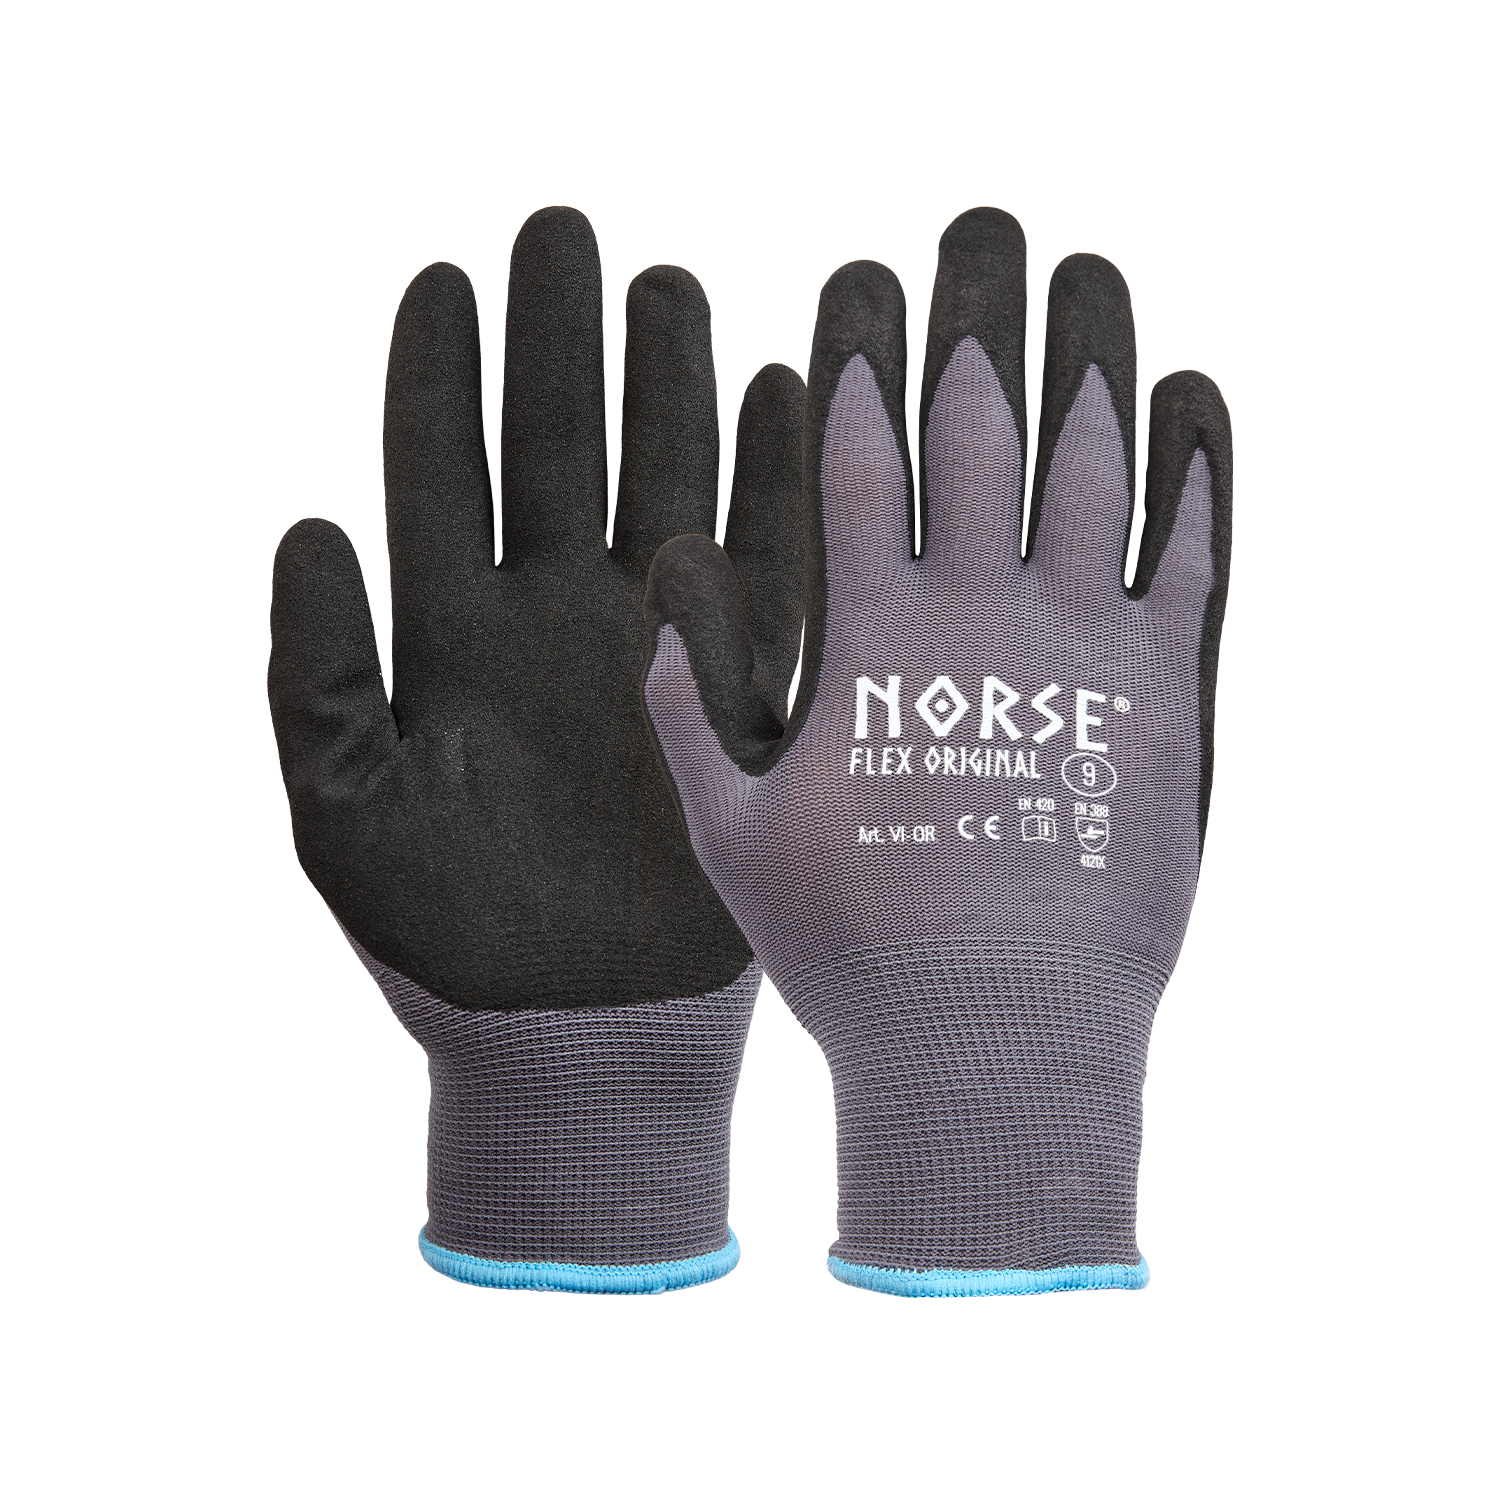 NORSE Flex Original assembly gloves size 9